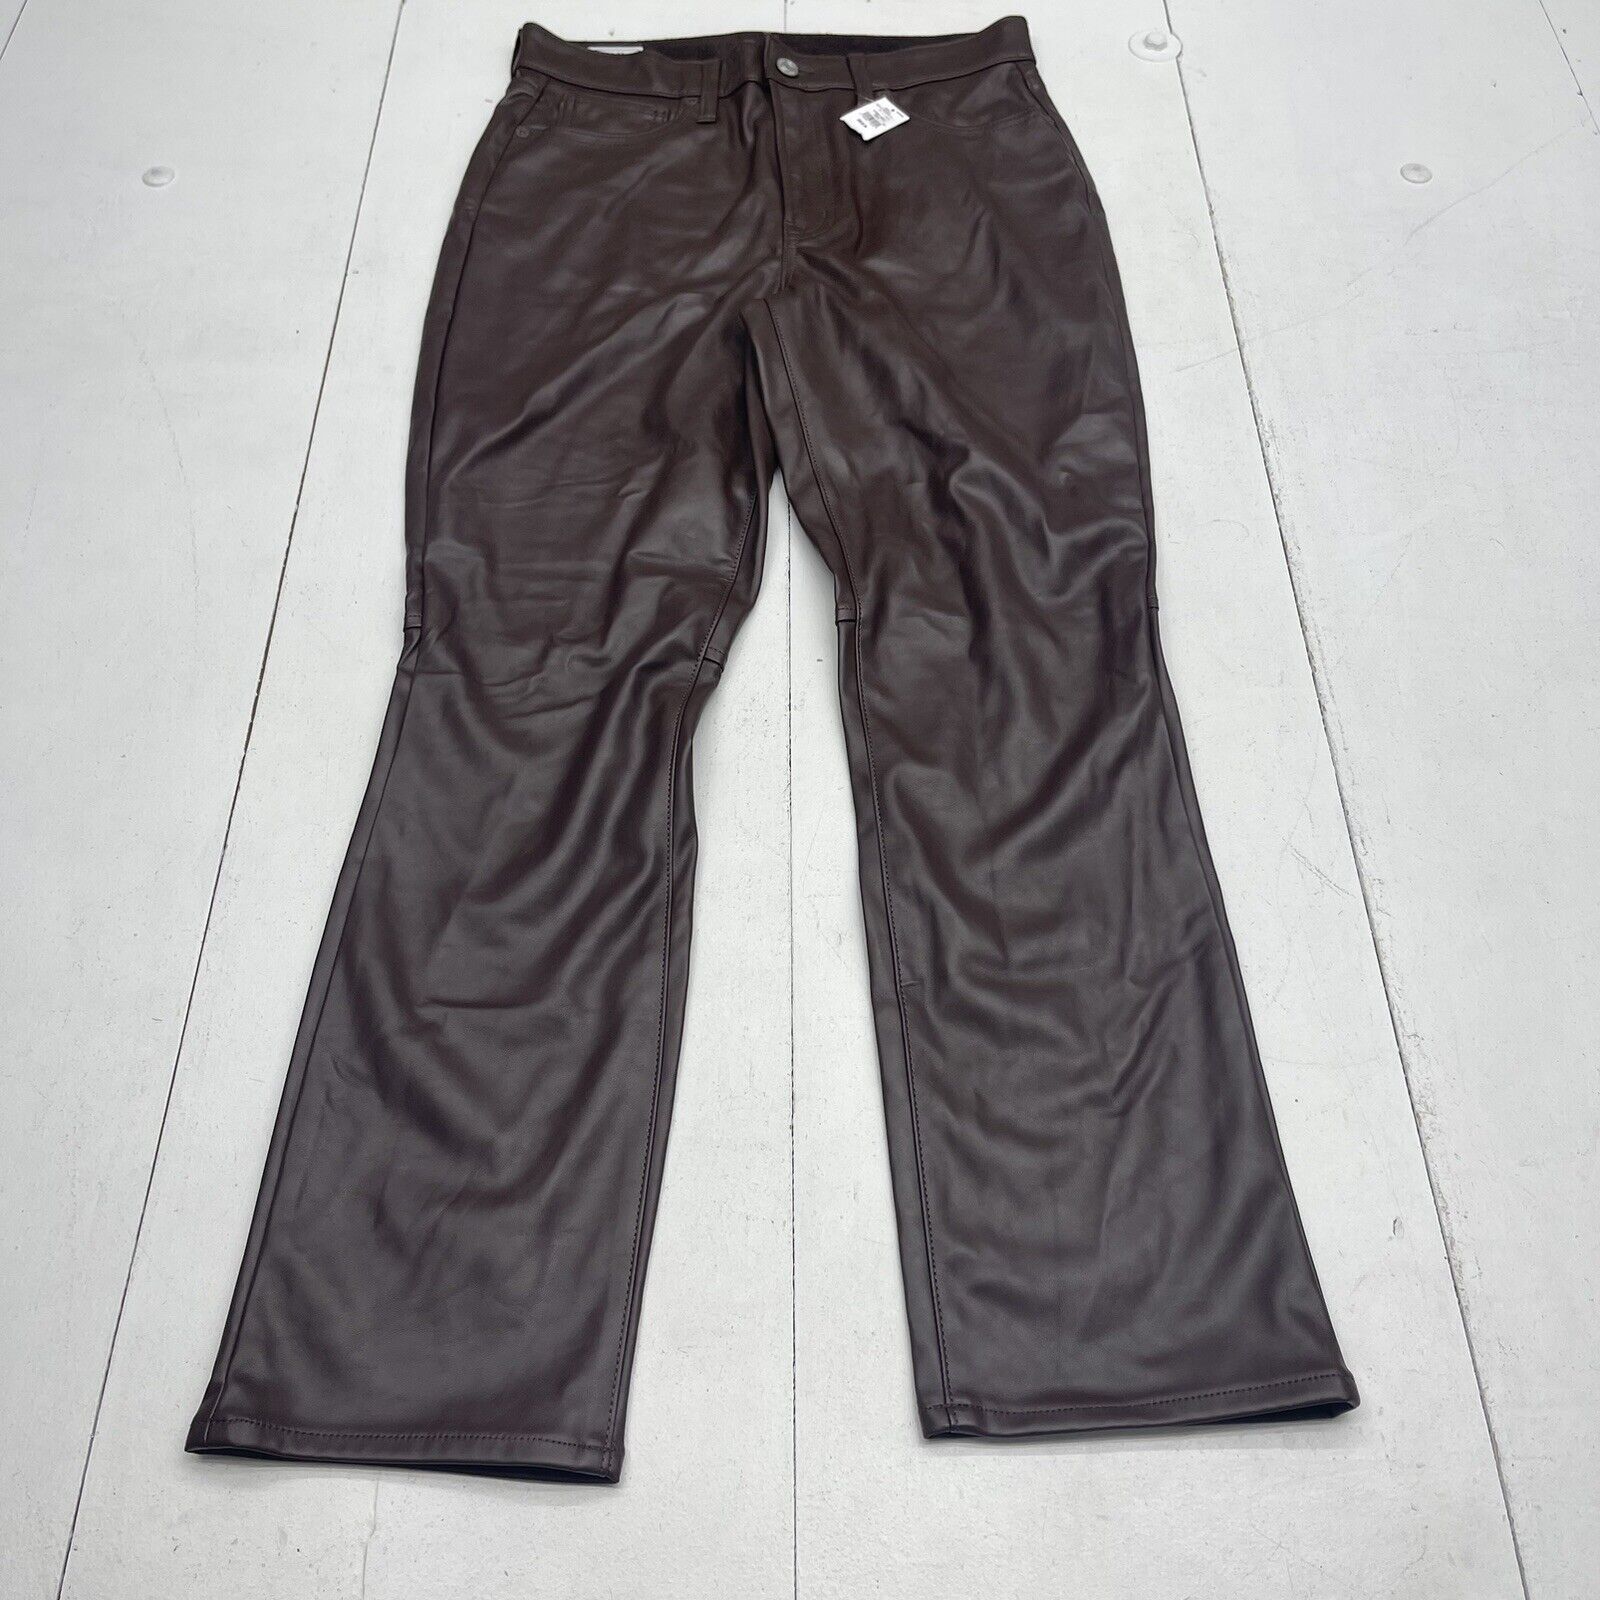 Gap High Rise Brown Faux Leather Vintage Slim Jeans Women's 28/8R